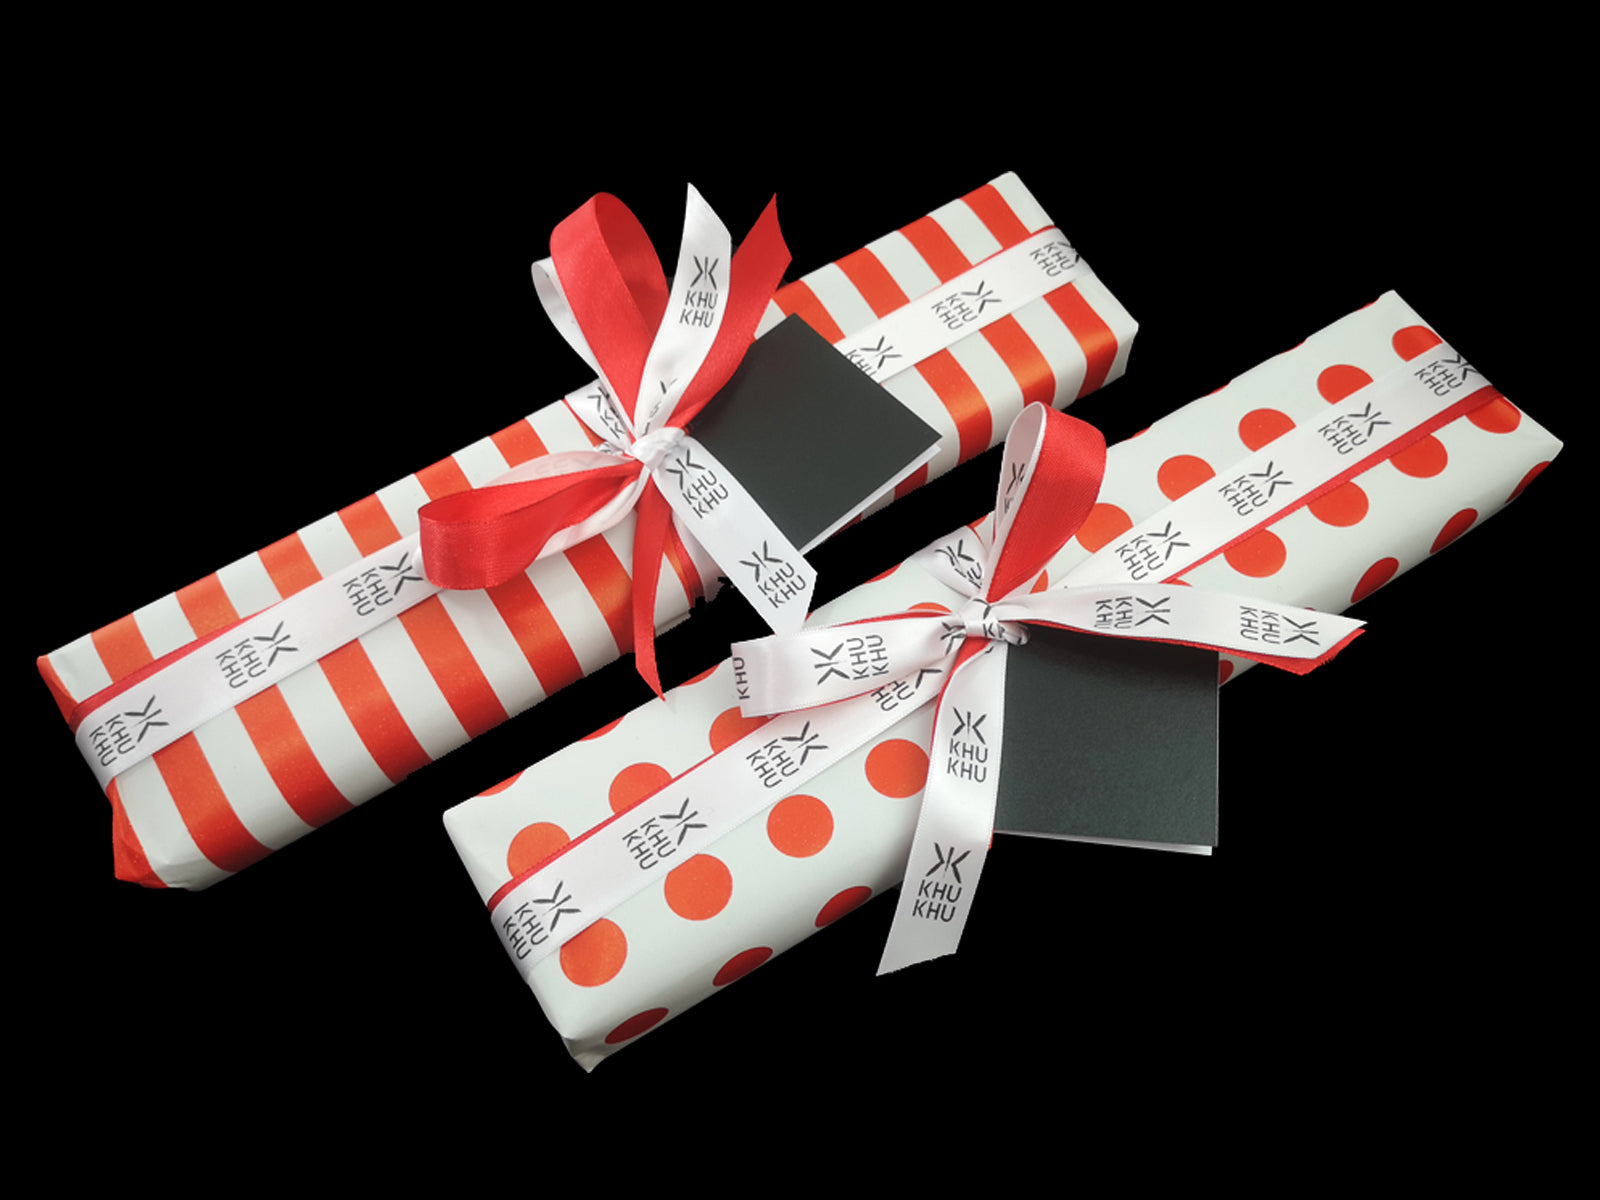 Khu Khu Box & Gift Wrap Set